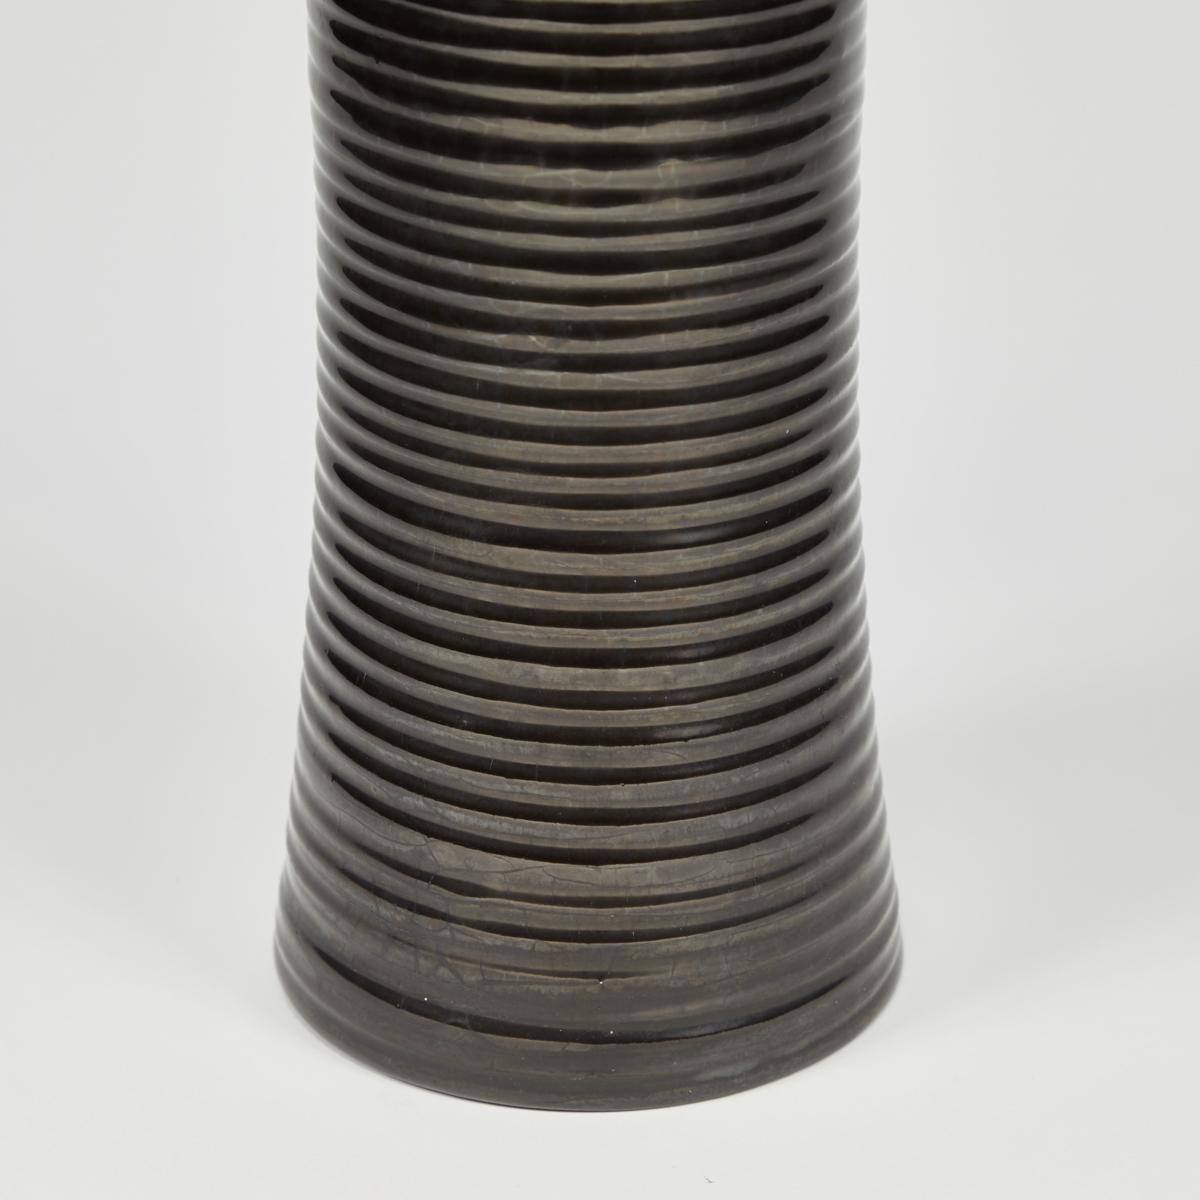 Edwardian Mid Century Modern Black Ceramic Vessel from England 